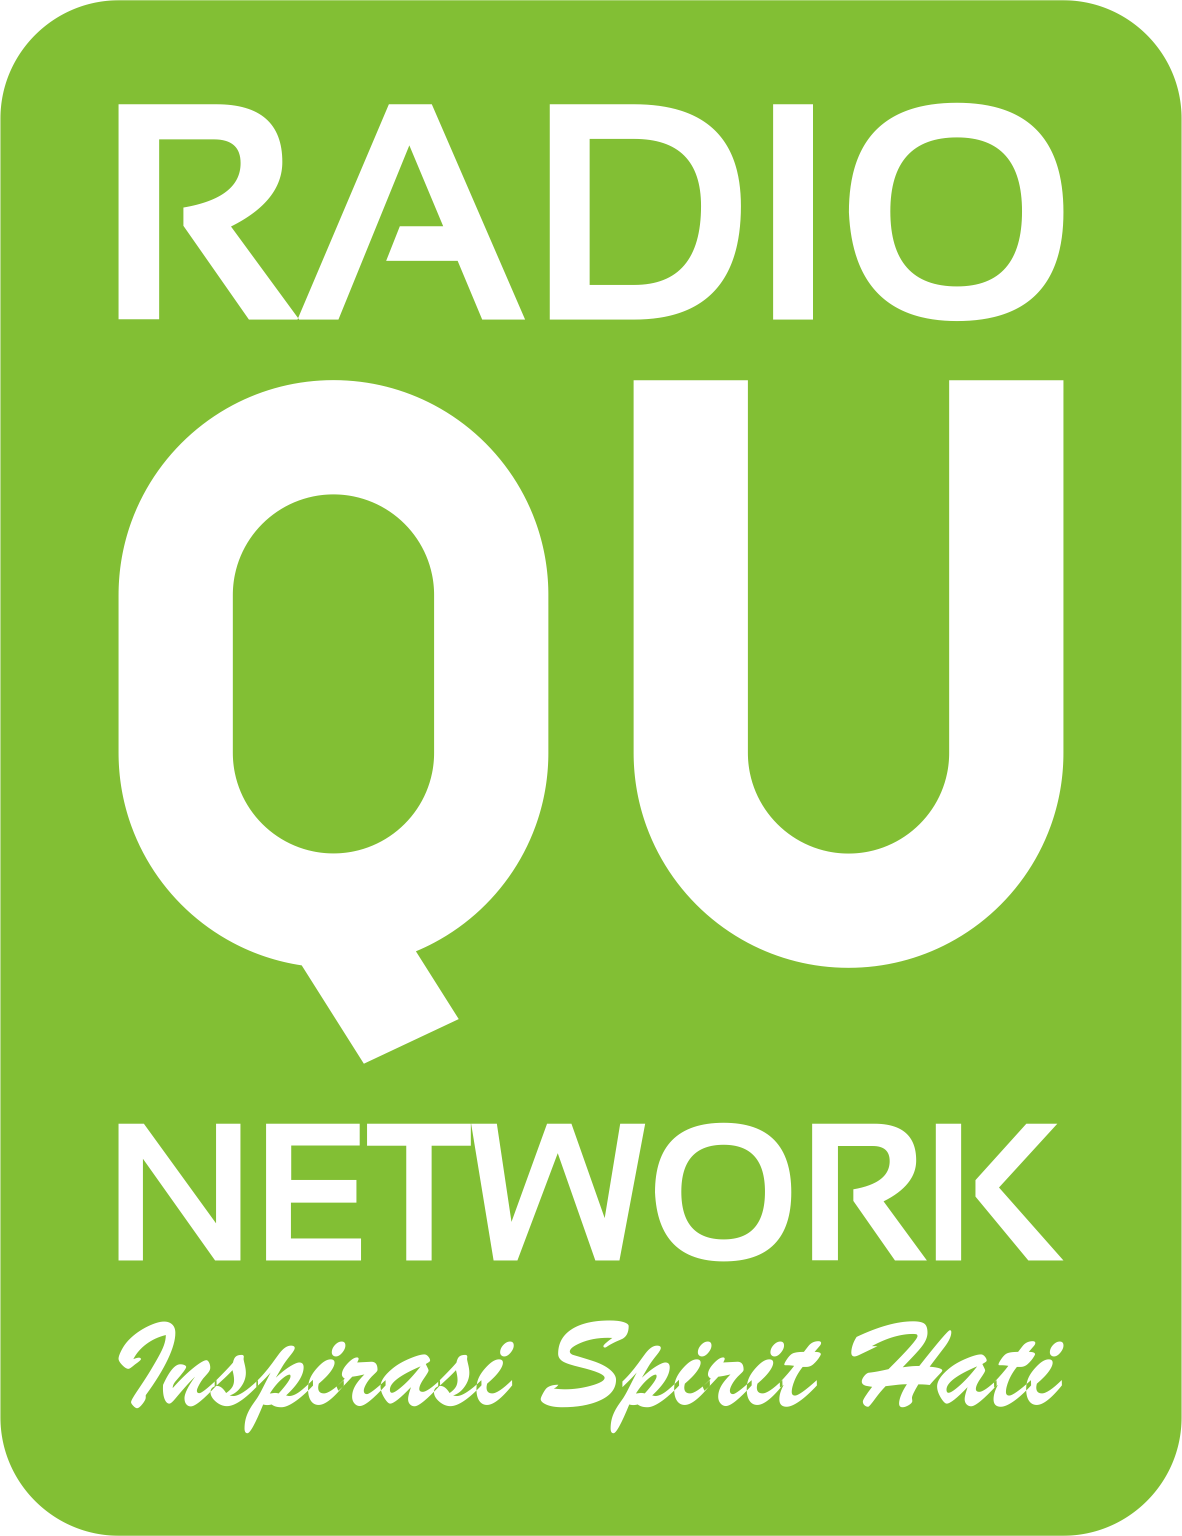 RadioQu Network